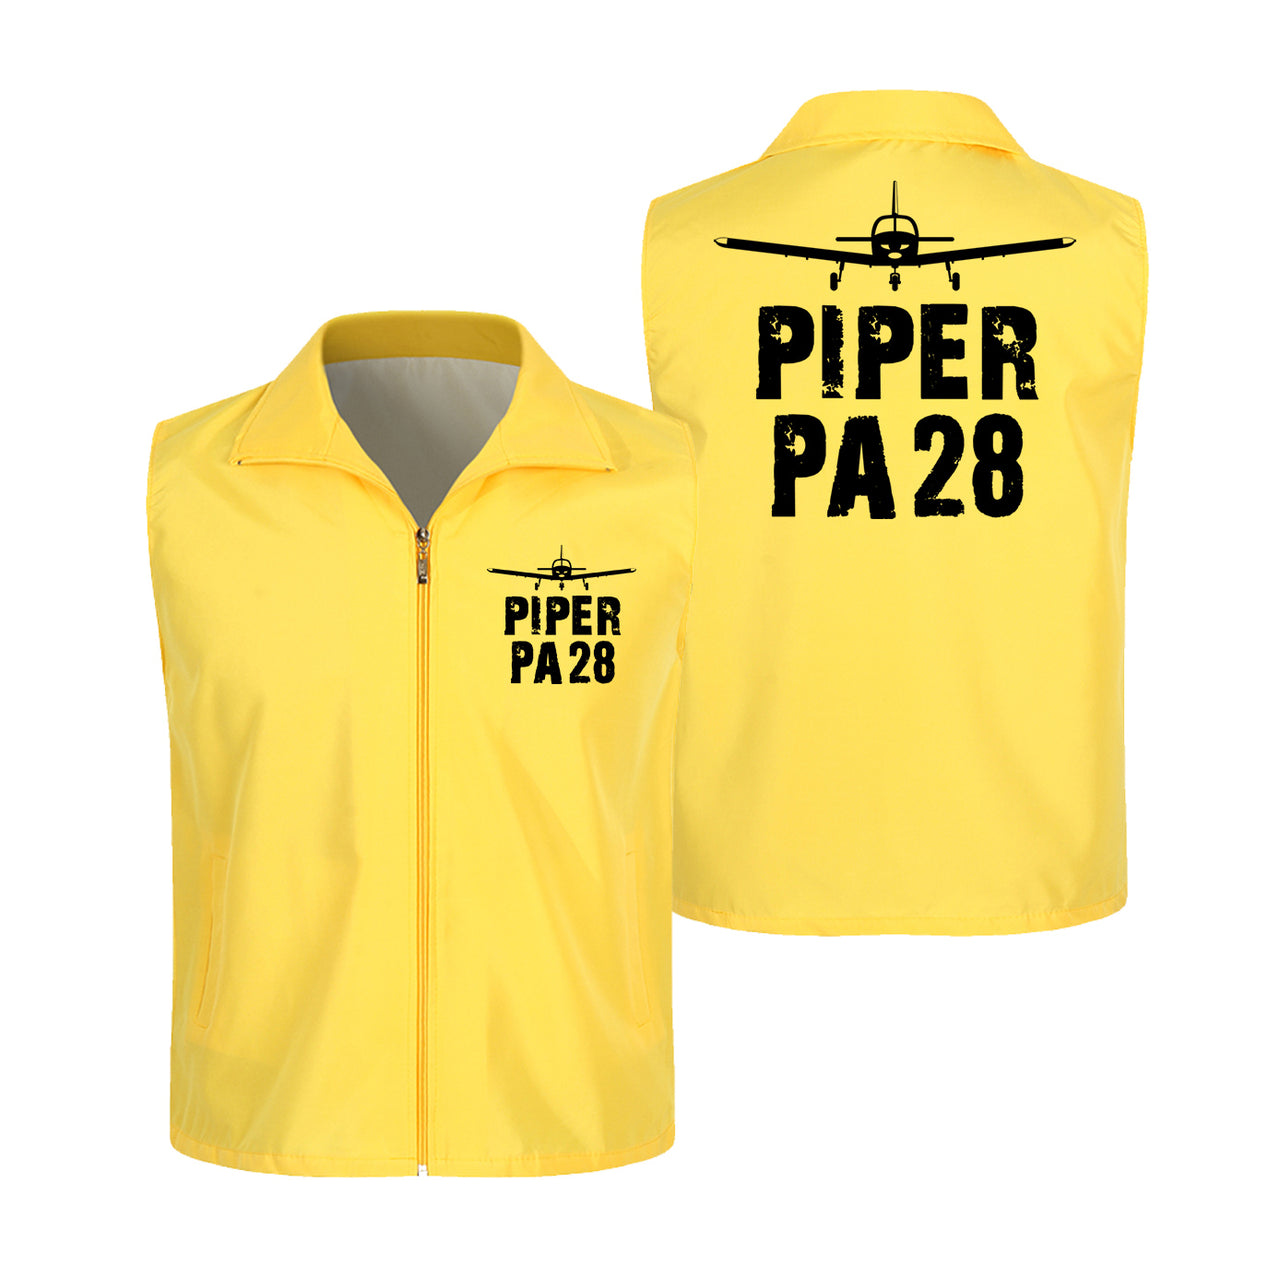 Piper PA28 & Plane Designed Thin Style Vests